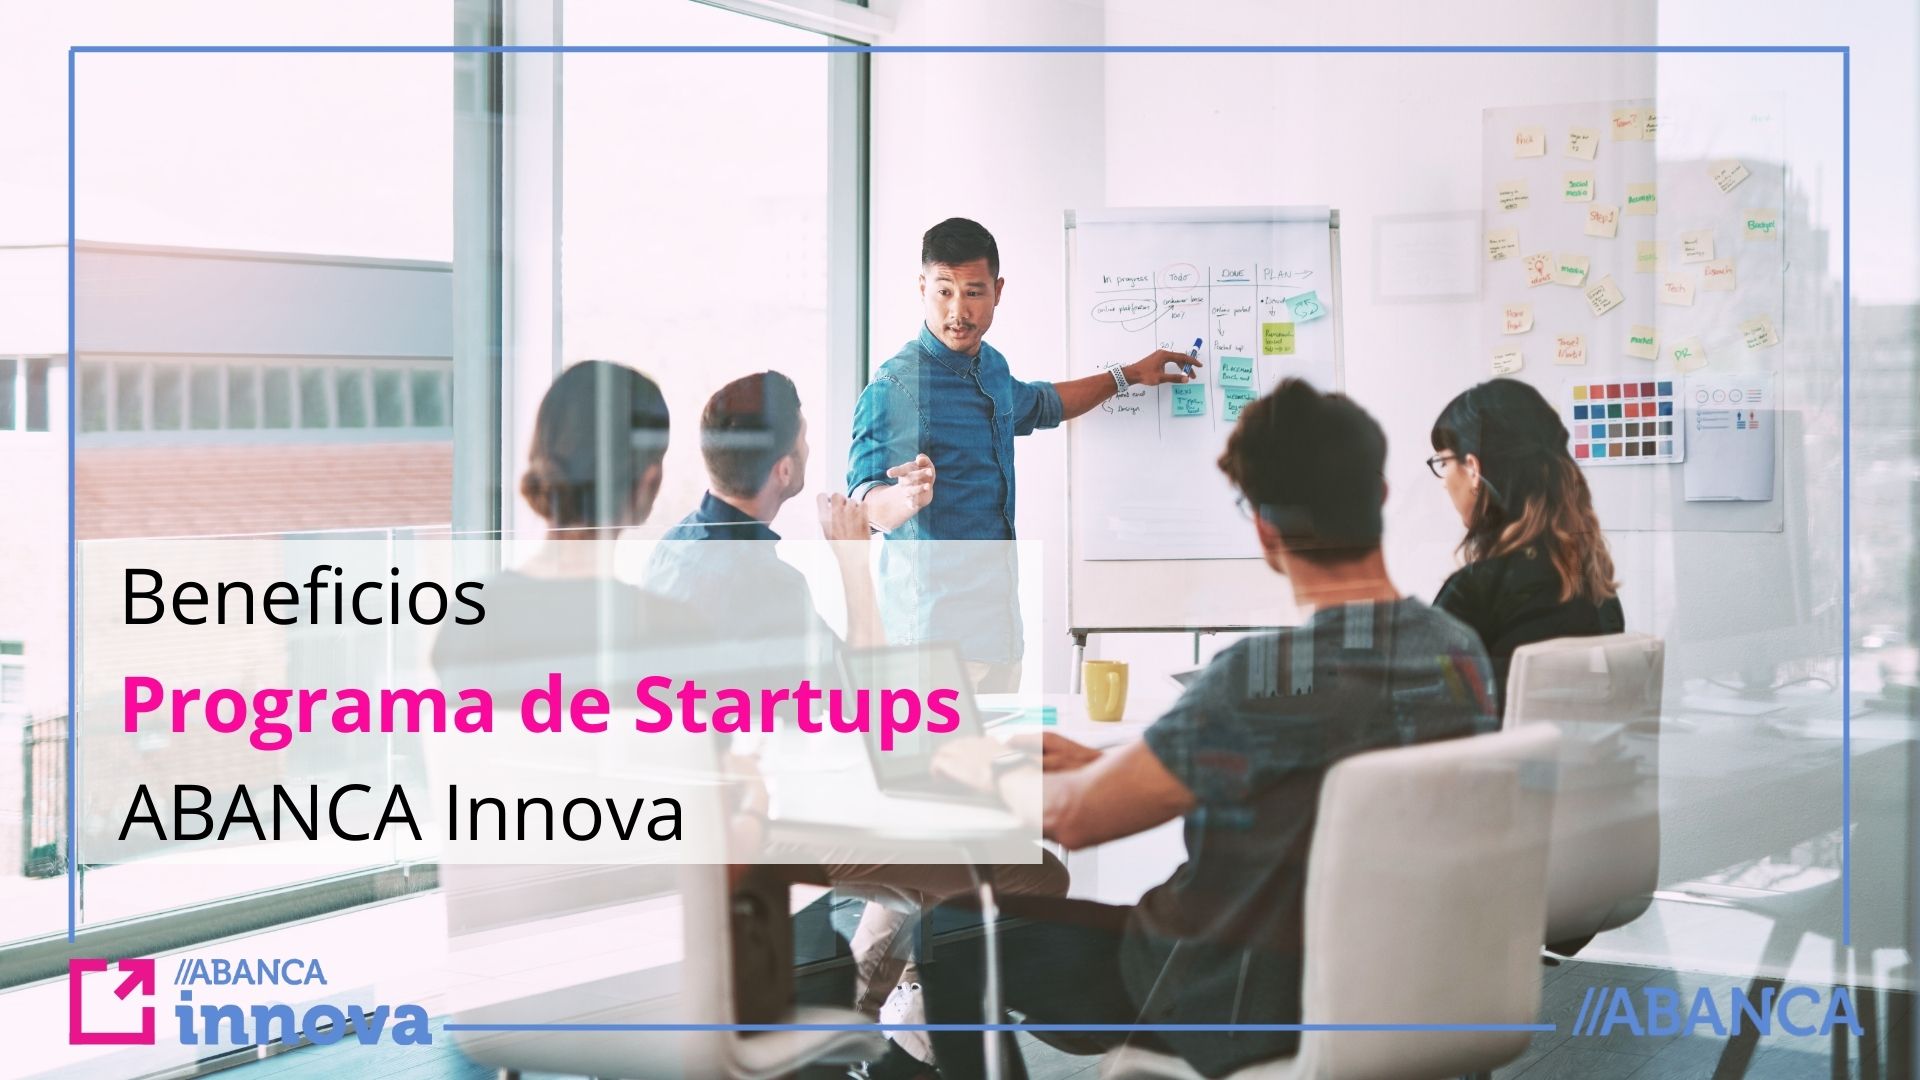 Beneficios del Programa para startups ABANCA Innova